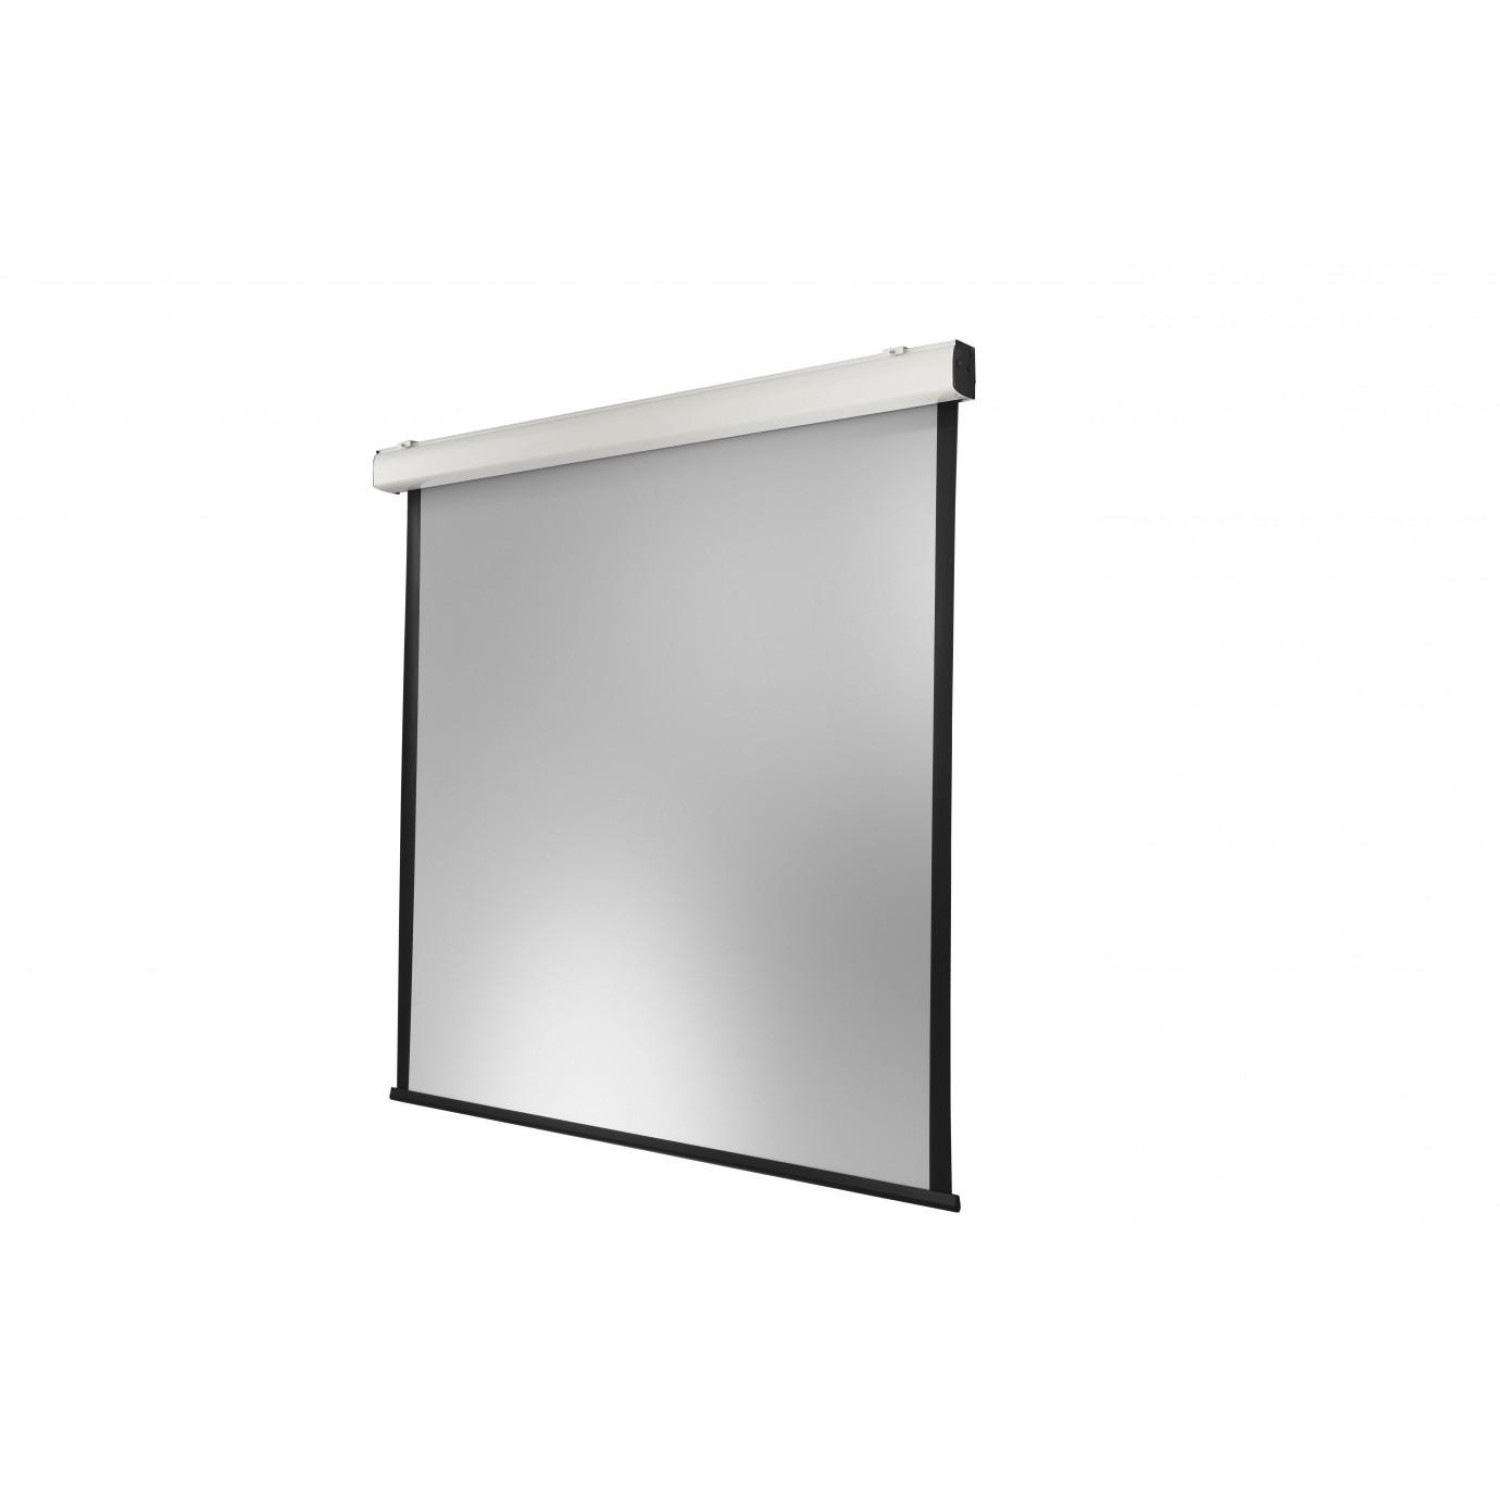 Електрически екран за стена CELEXON Electric Expert XL, 400 x 400 cm, 1:1, matt white, PVC